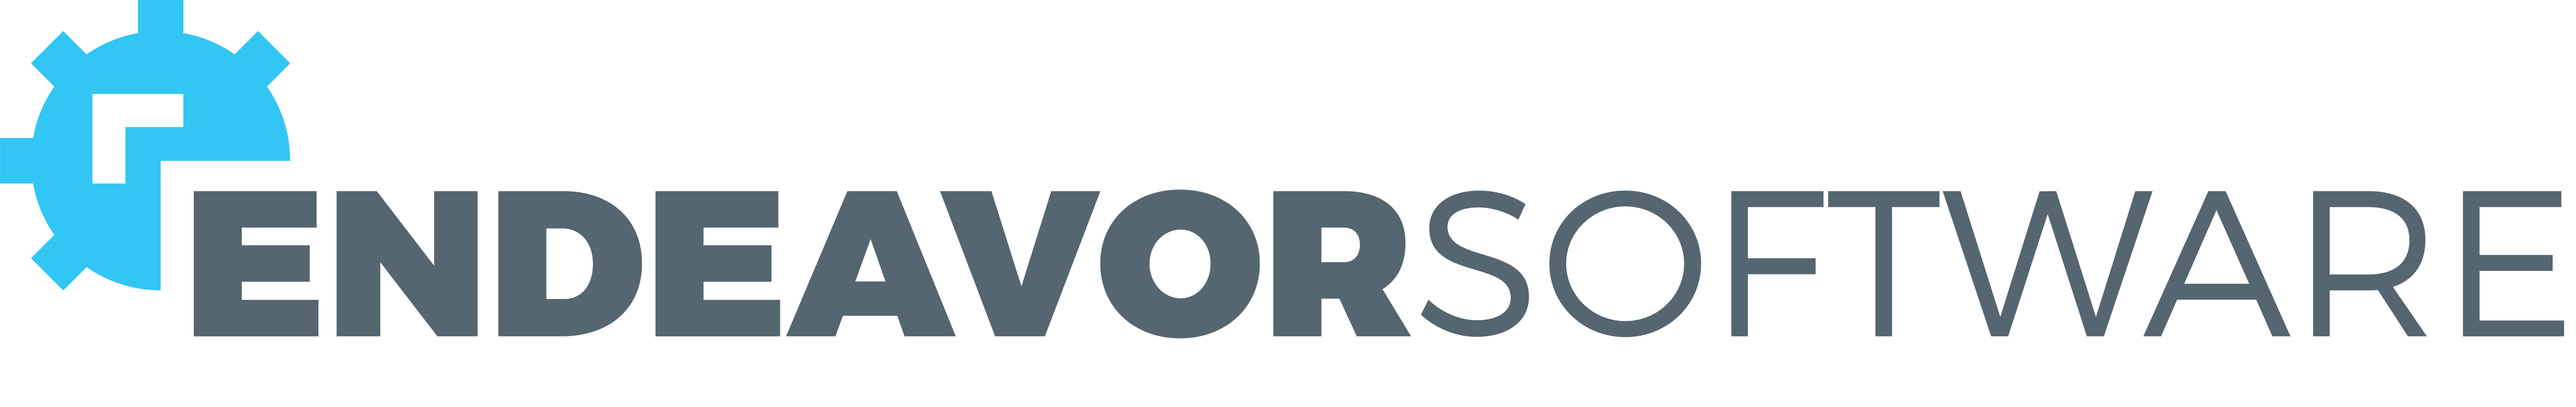 Endeavor Software Logo